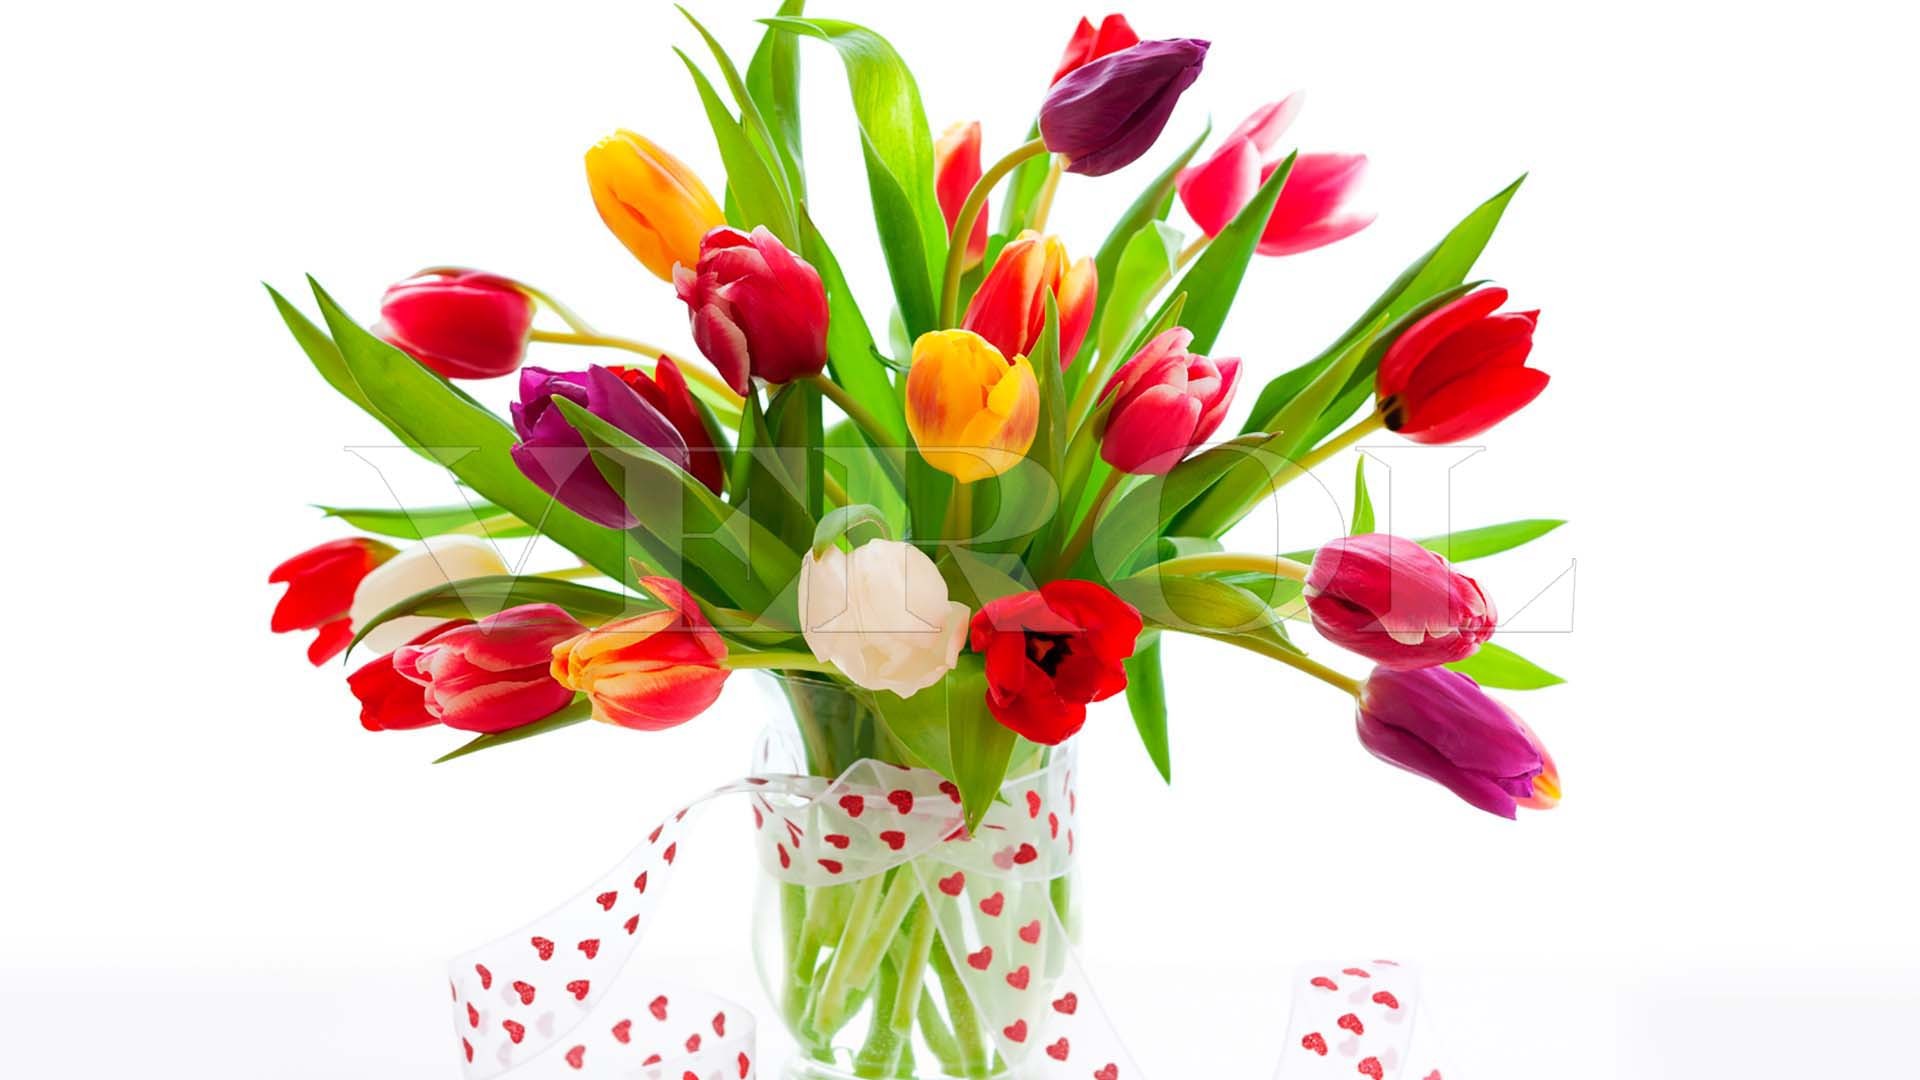 International Women's Day Flowers image free download